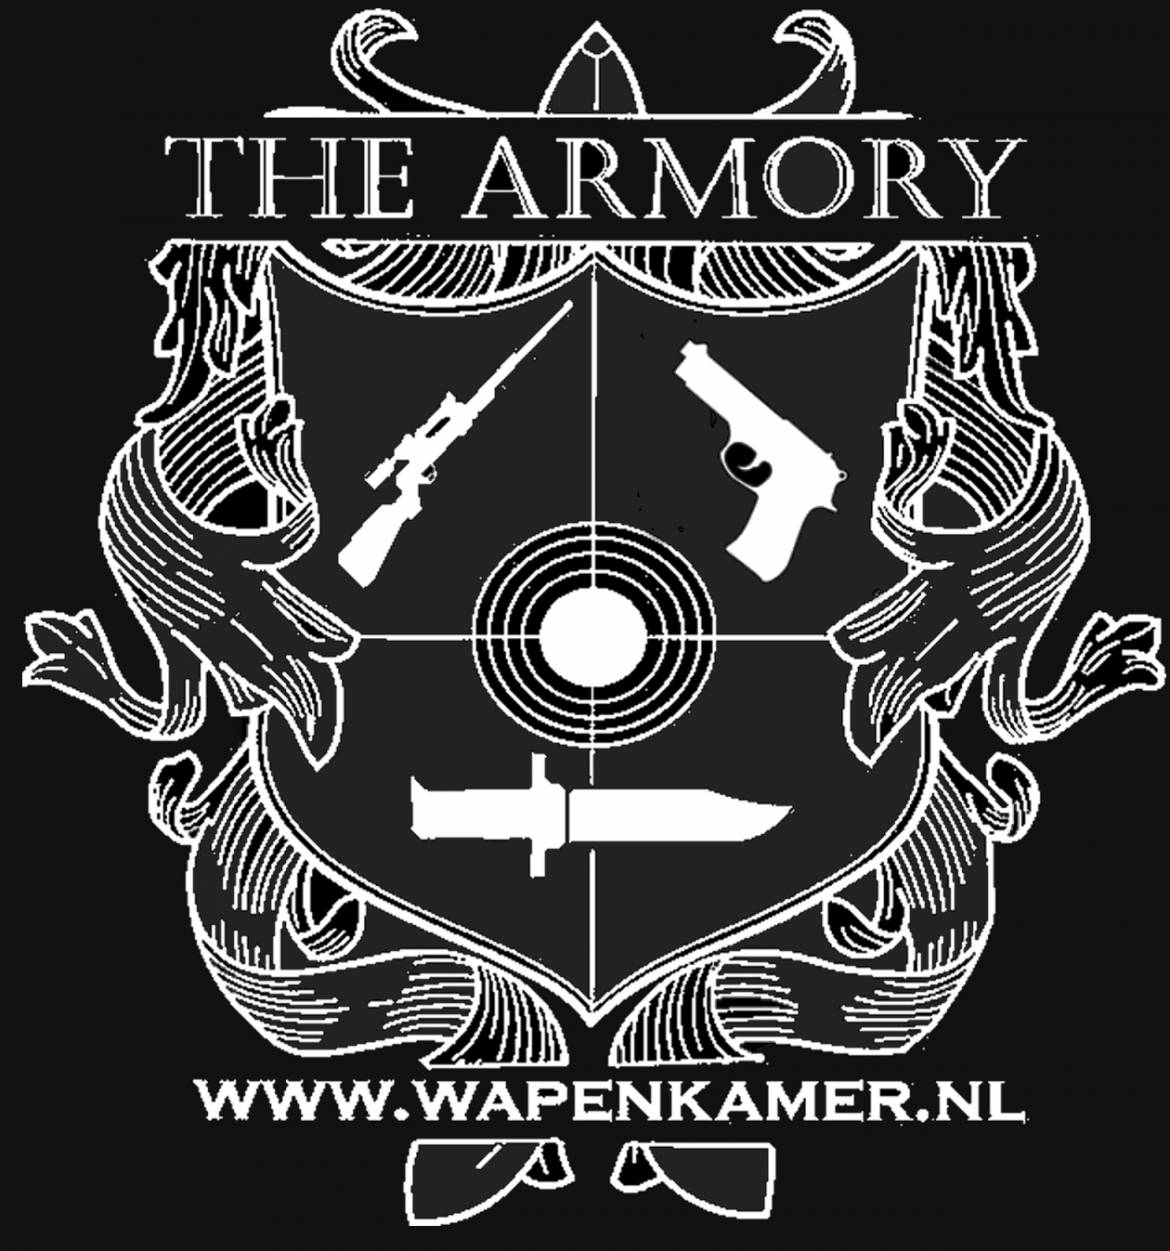 TheArmory-zwart-gun-safety-3-1.jpg